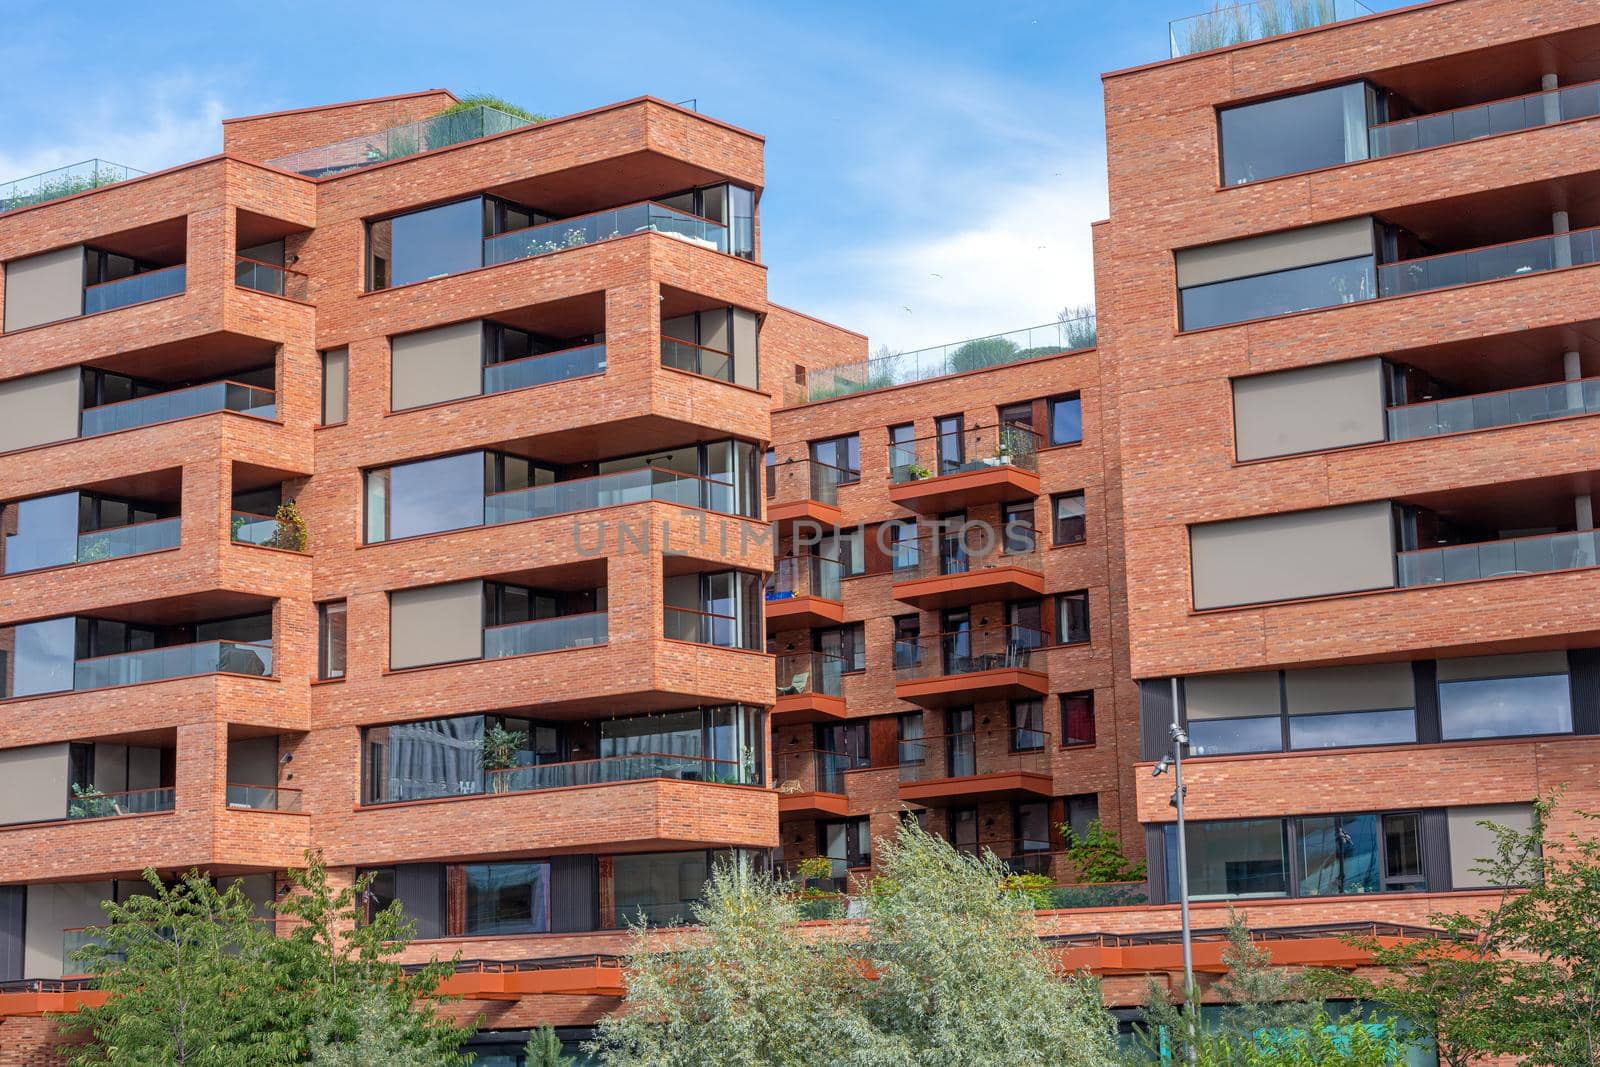 Modern red apartment buildings seen in Oslo, Norway